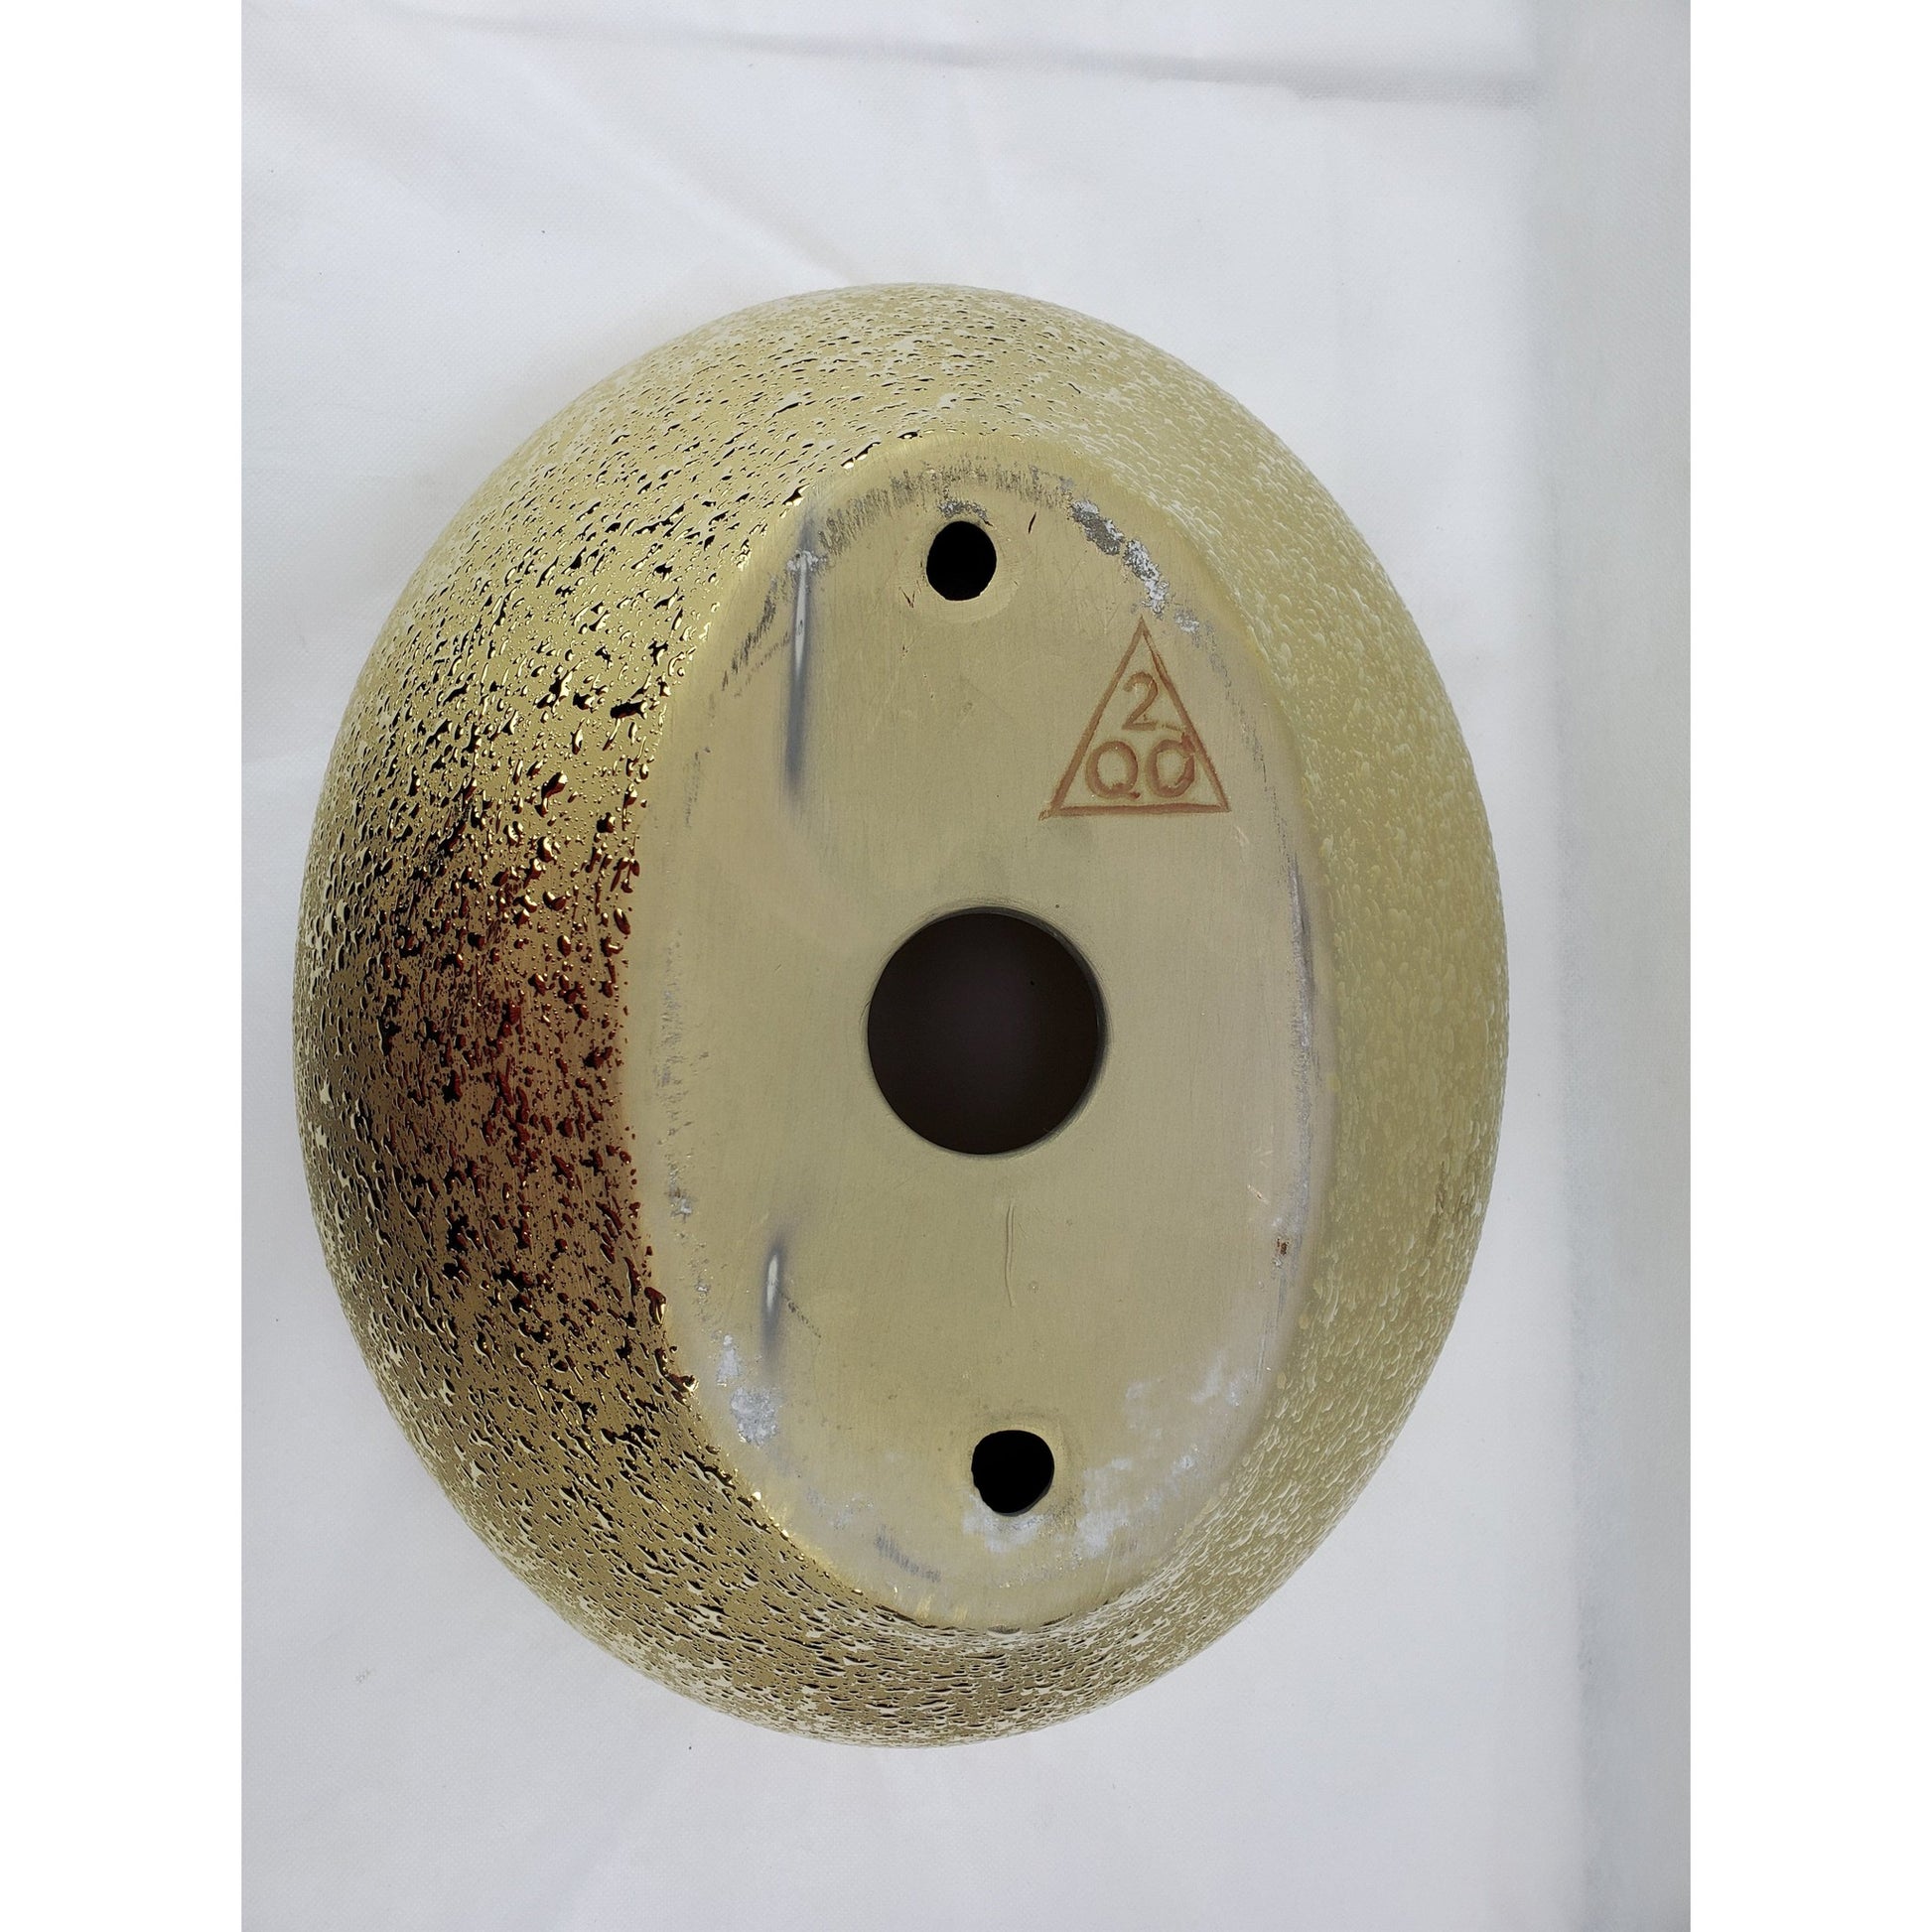 American Imaginations AI-27933 Oval Gold Ceramic Bathroom Vessel Sink with Enamel Glaze Finish